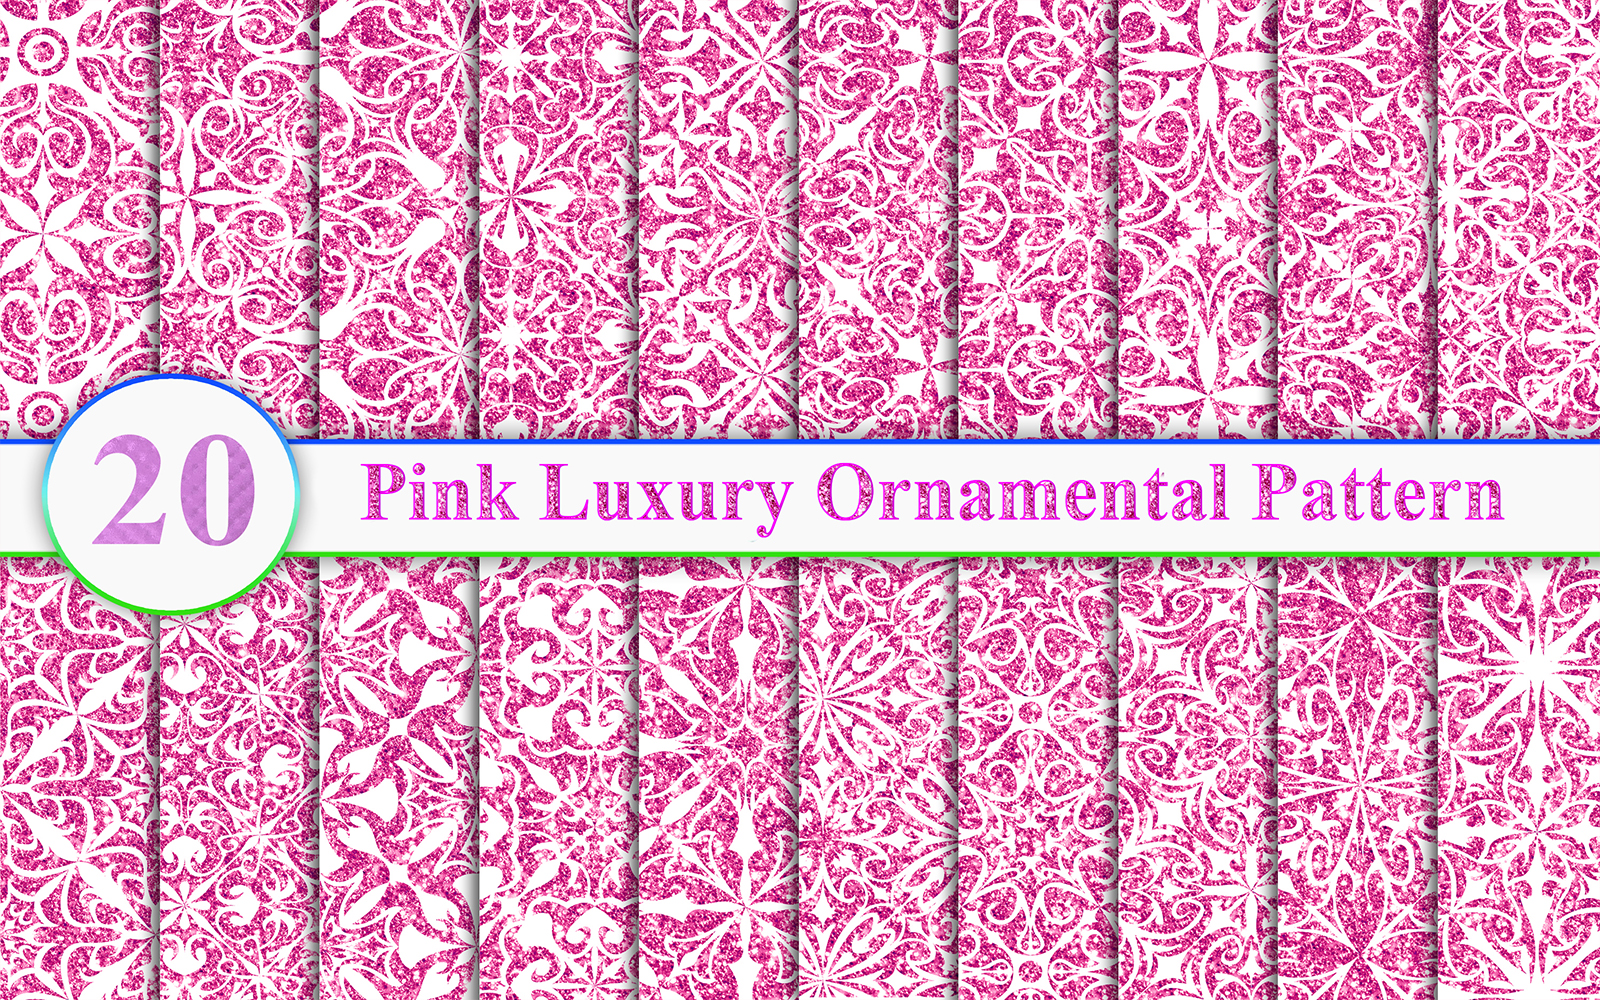 Pink Luxury Ornamental Pattern Background